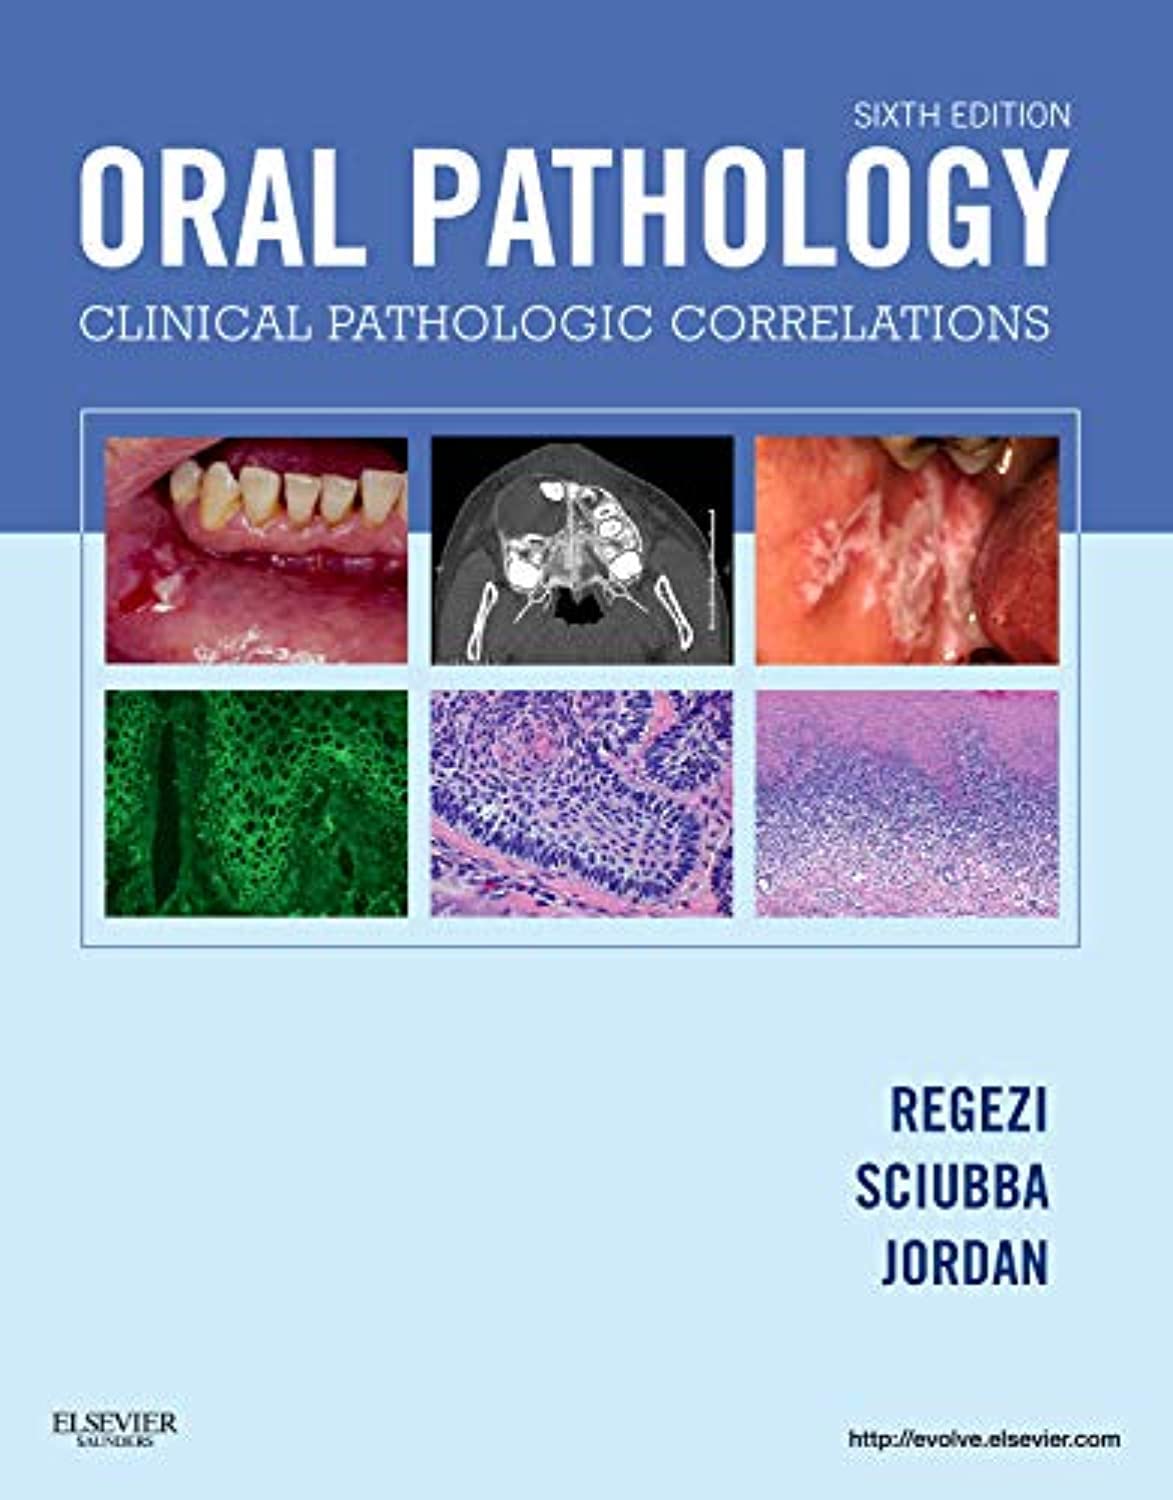 Oral Pathology: Clinical Pathologic Correlations - Sixth Edition By Regezi, Sciubba, Jordan